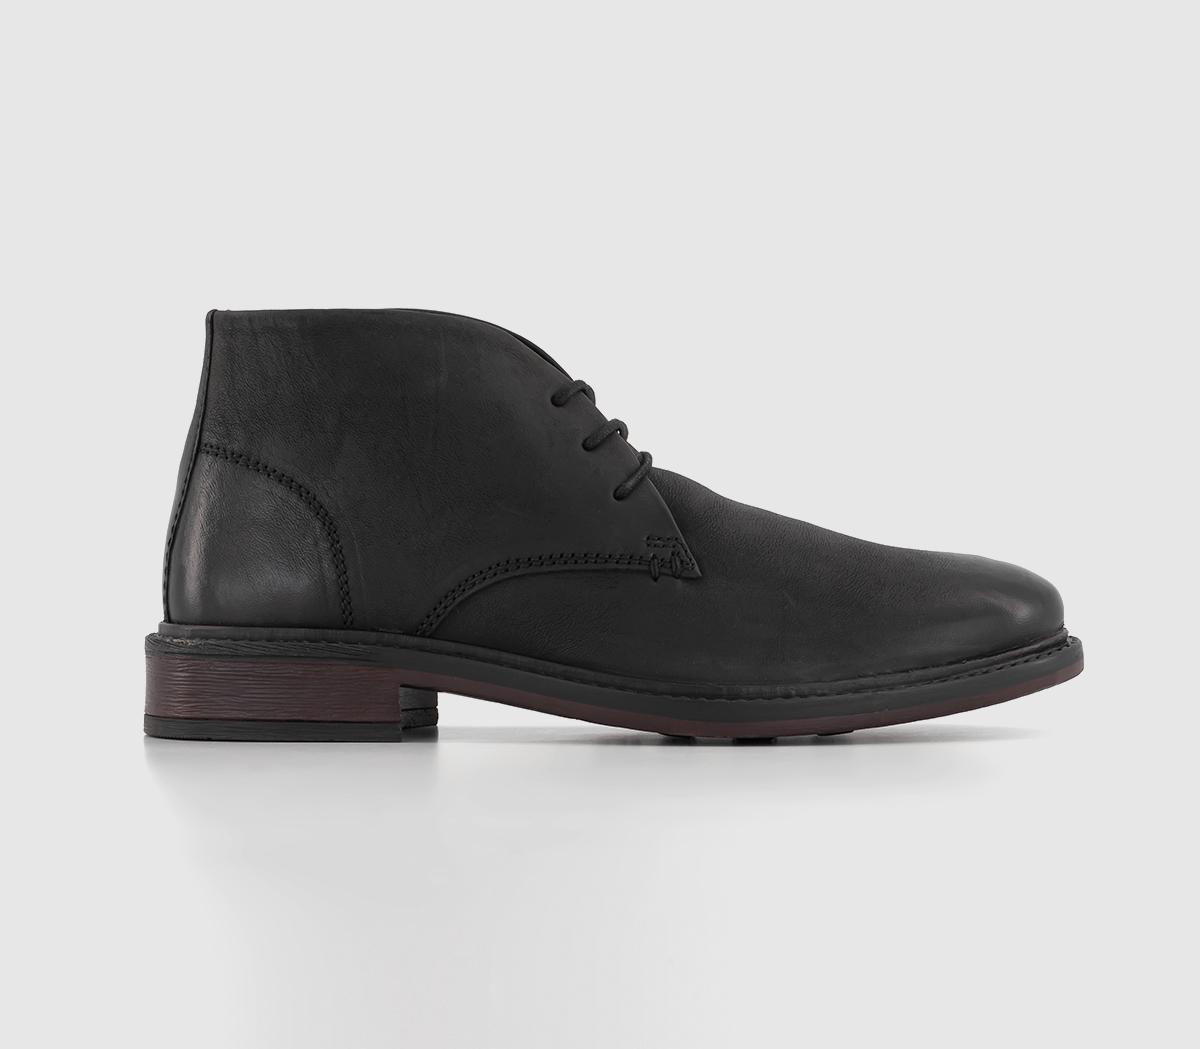 OFFICE Burlington Chukka Boots Black Leather - Men’s Boots